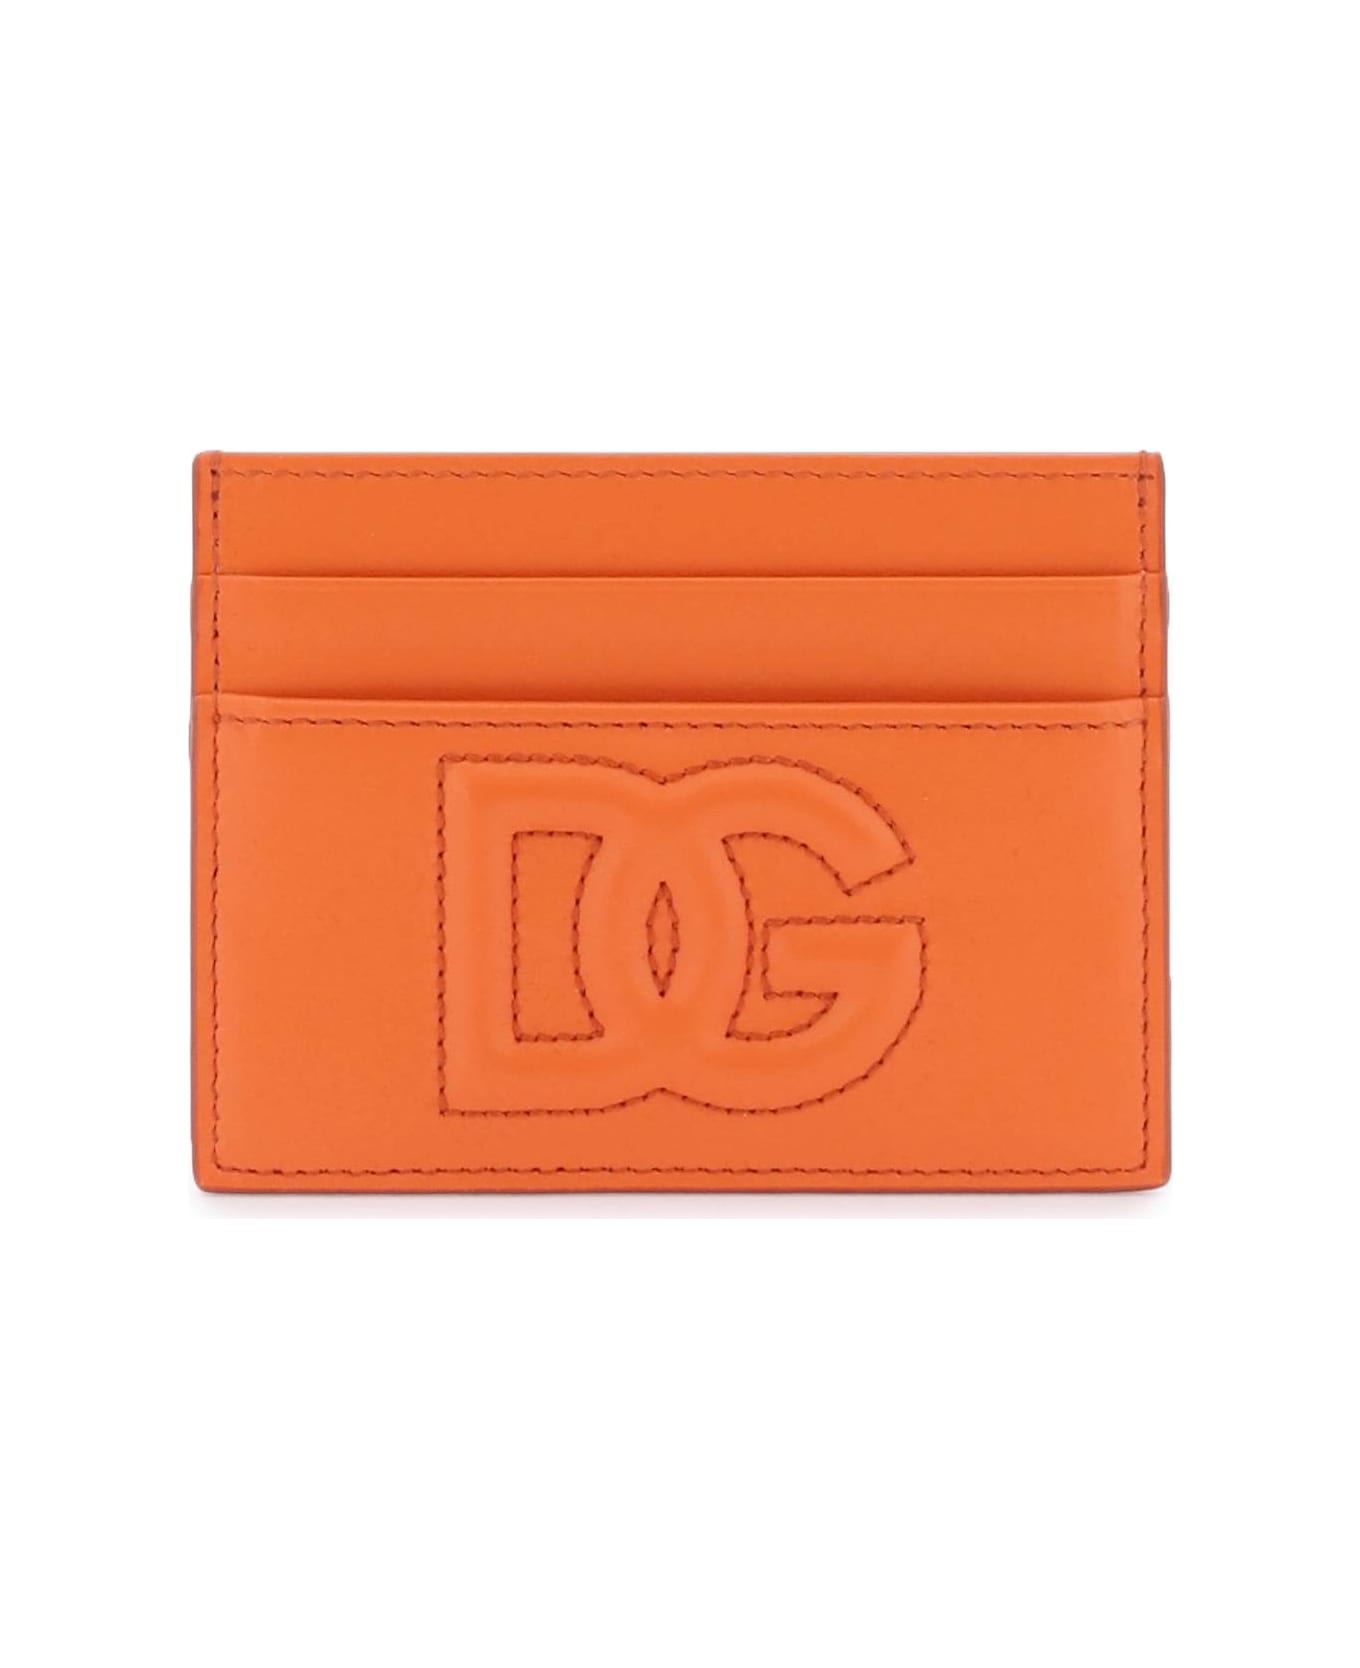 Dolce & Gabbana Leather Card Holder - ARANCIO (Orange) 財布